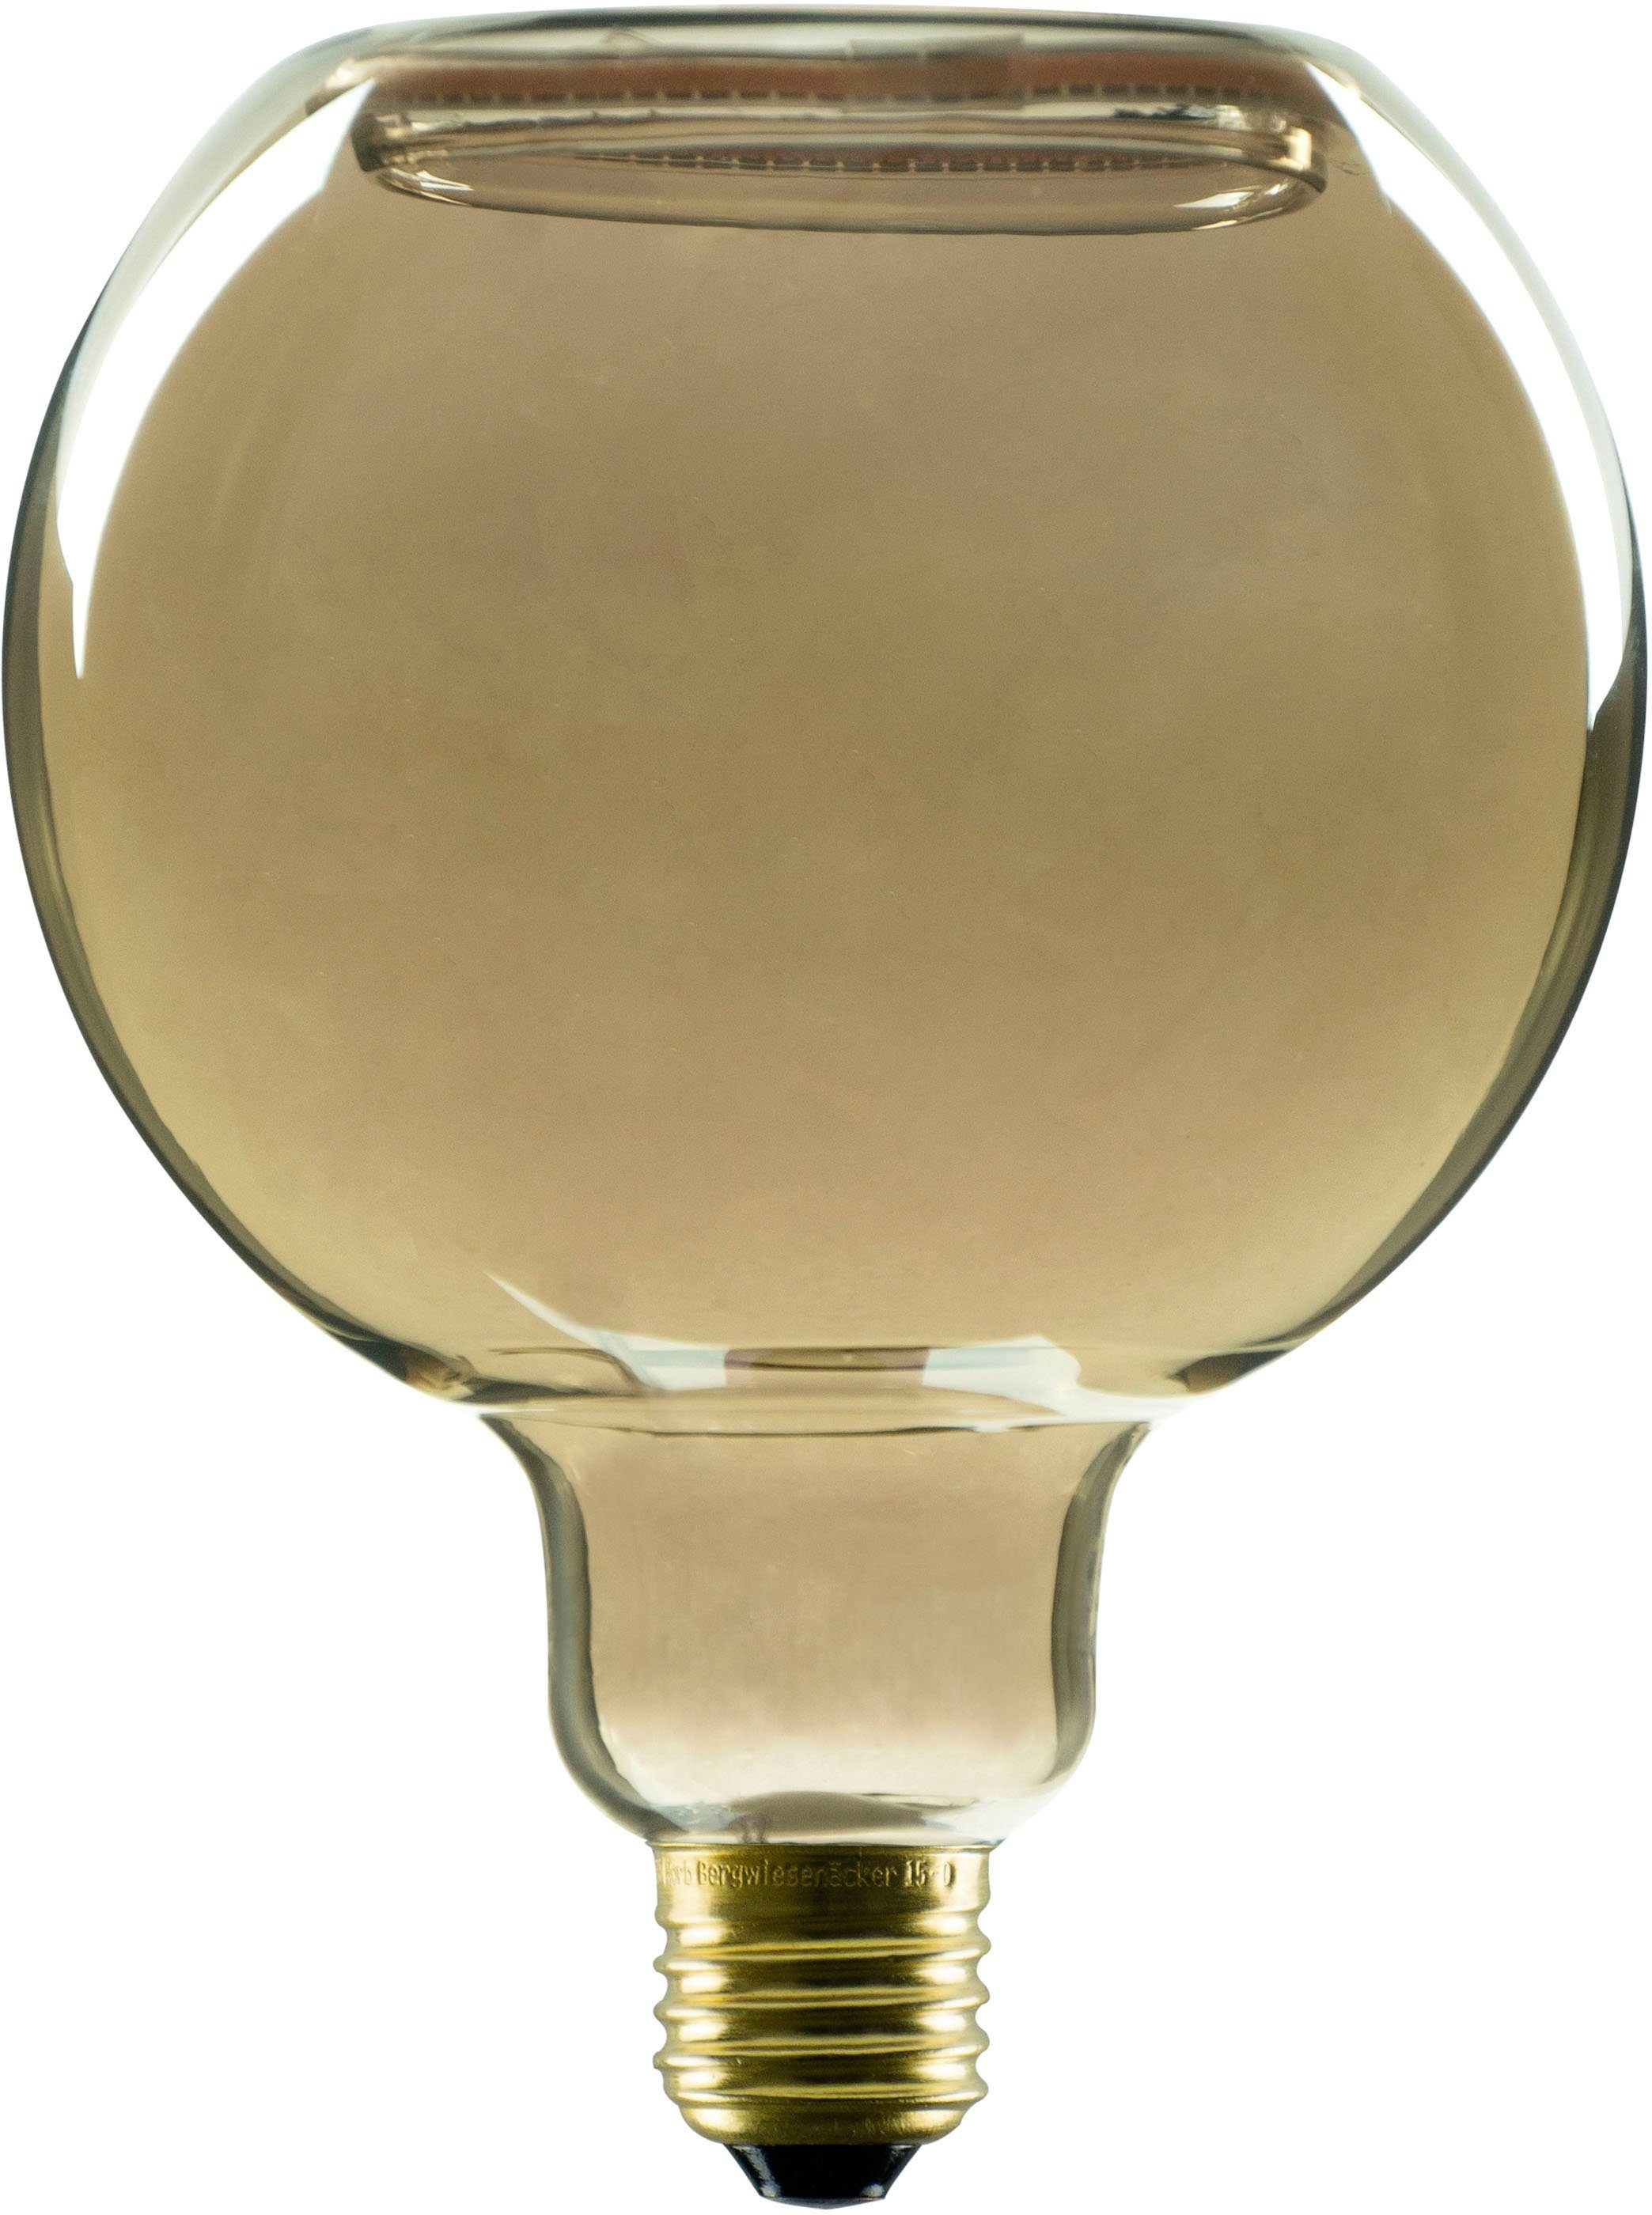 SEGULA LED-Leuchtmittel LED Floating Globe 125 smokey grau, E27, 1 St., Extra-Warmweiß, LED Globe 125 smokey grau, E27, 6W, CRI >85, dimmbar, Aussenbereich